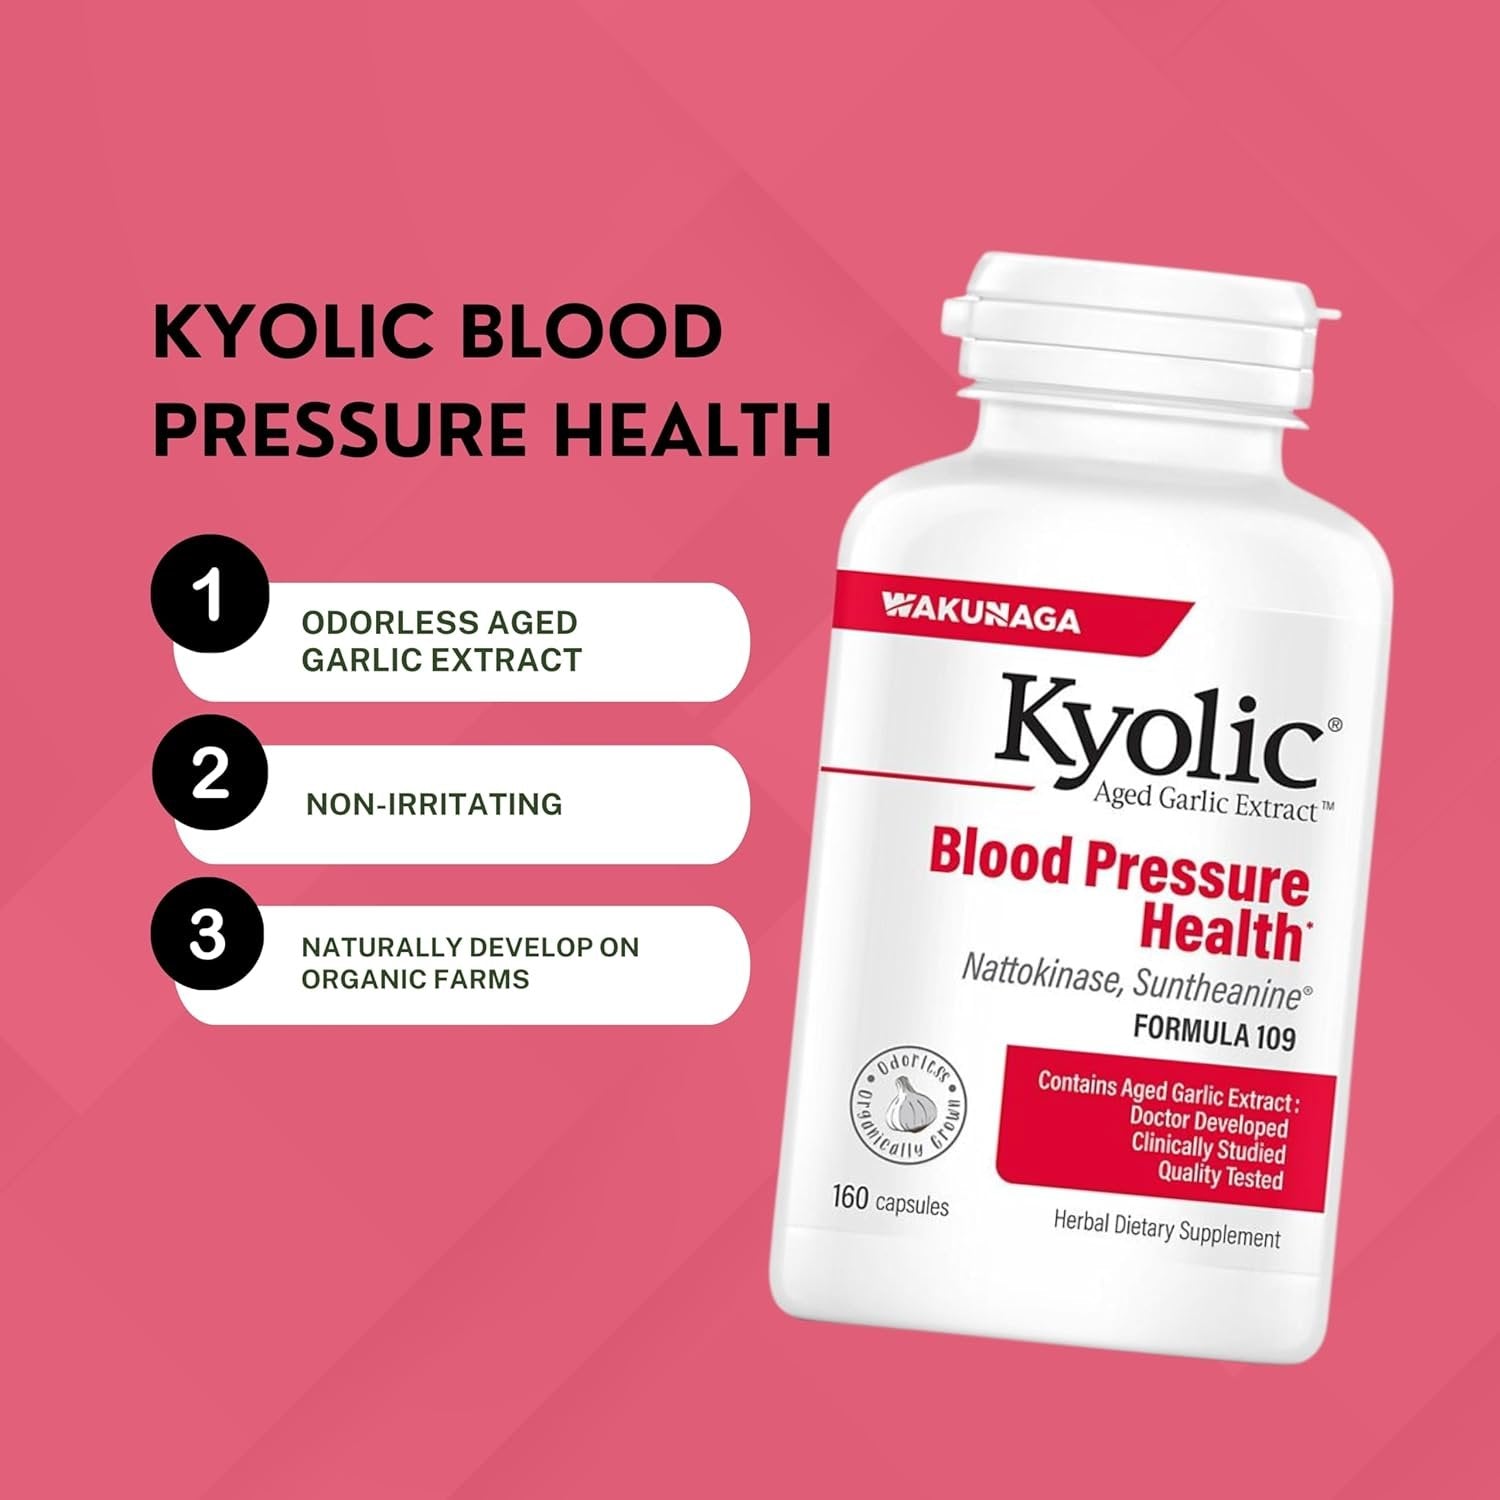 Kyolic Aged Garlic Extract Capsules Blood Pressure Health Formula 109 - Organic Garlic Supplement Odorless - 160 Capsules - with Multi-Purpose Key Chain